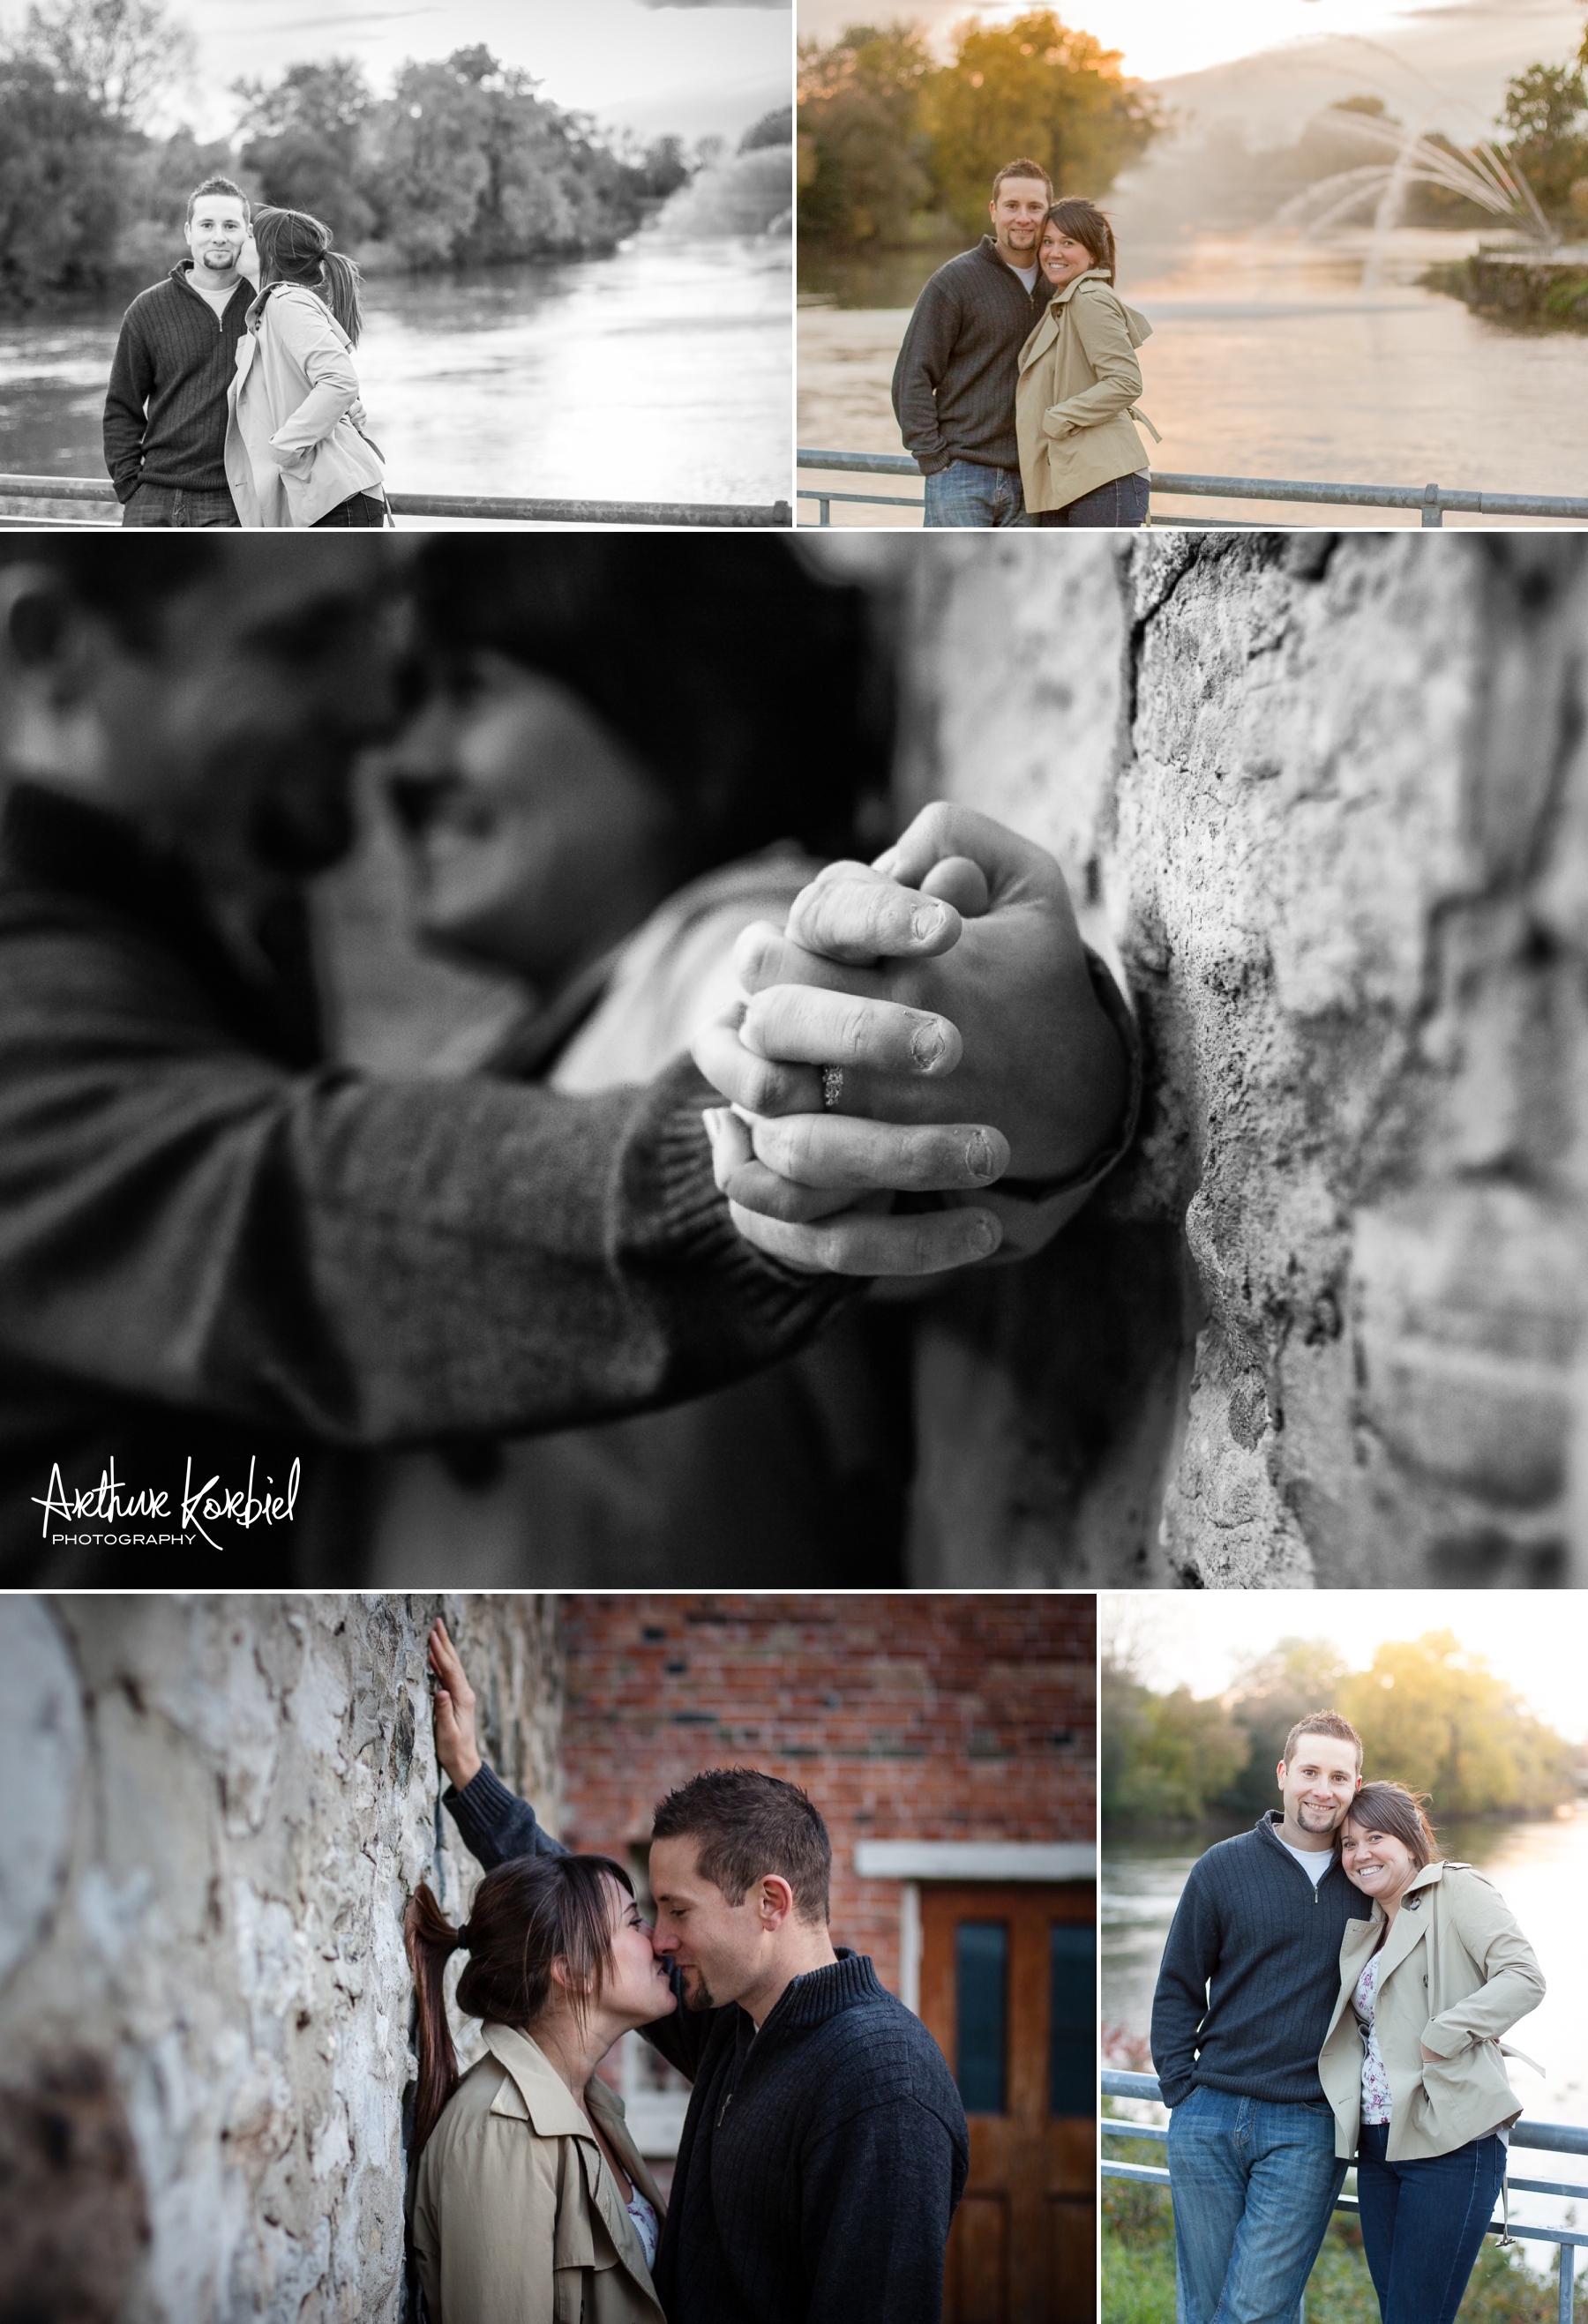 Arthur Korbiel Photography - London Engagement Photographer - Katie & Mike_006.jpg